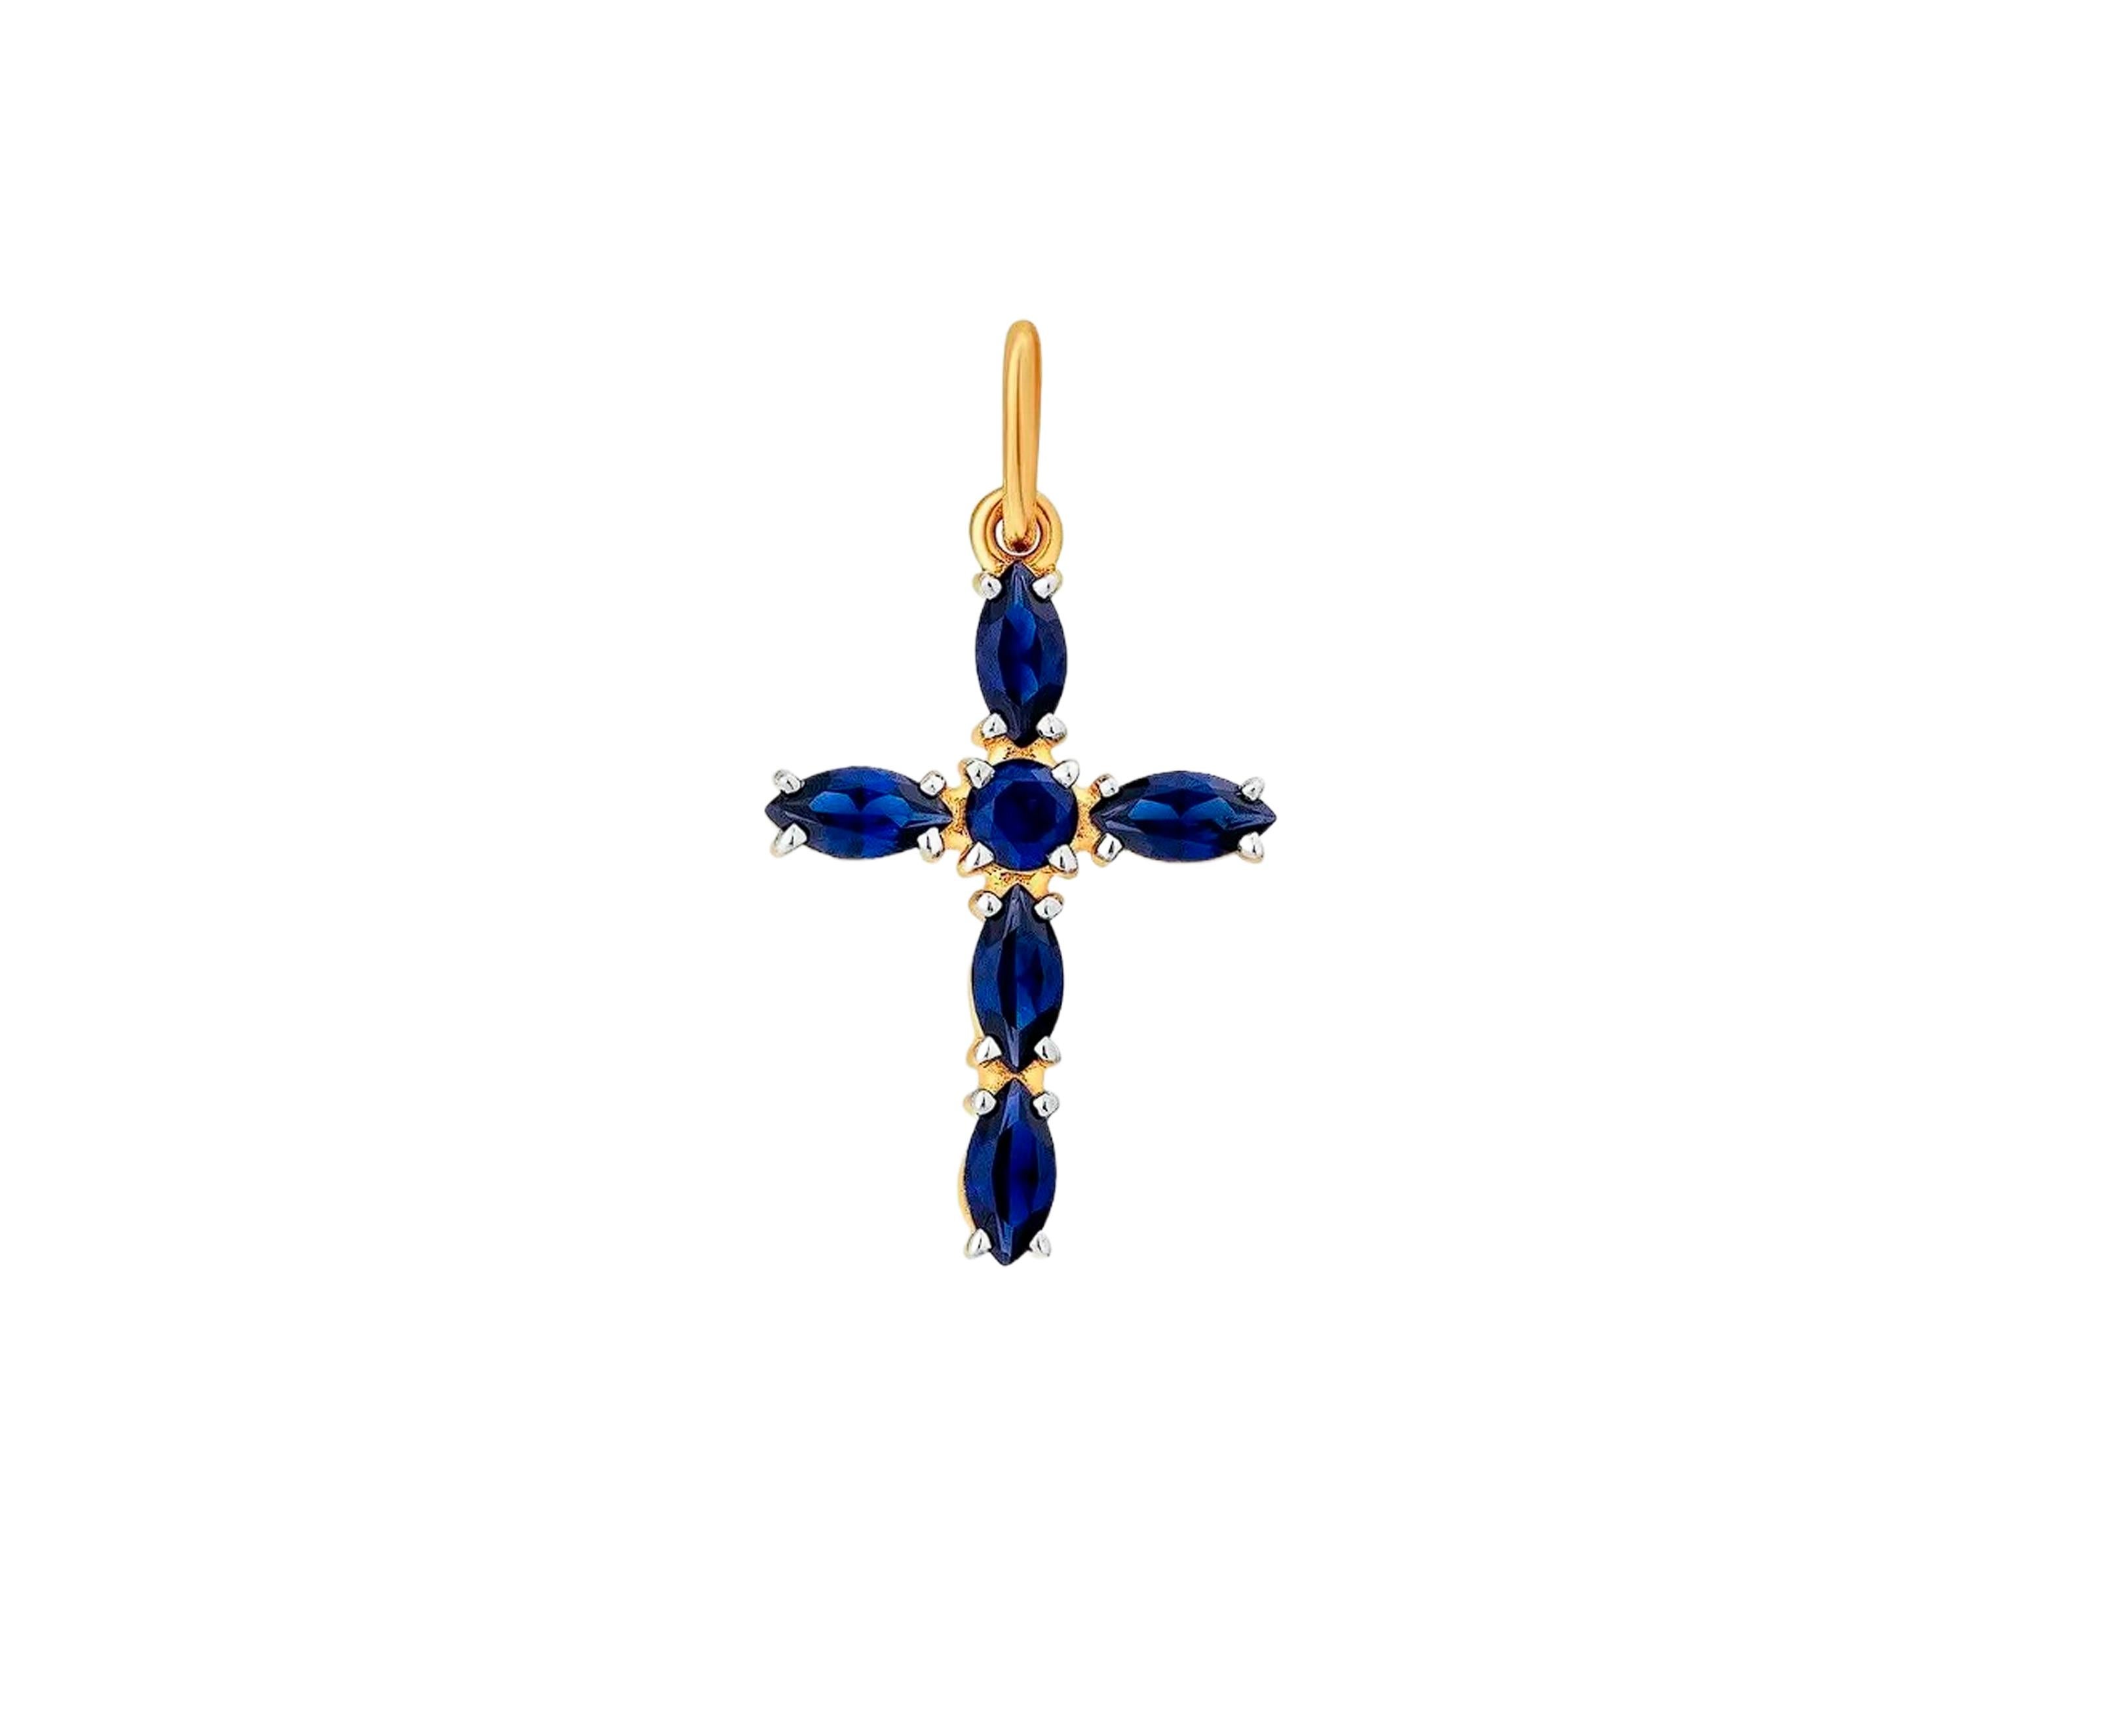 14k gold blue gemstones cross pendant. Lab sapphires cross pendant. Marquise blue lab sapphires cross pendant. 

Metal: 14k gold 
Weight: 1.2 gr.
Pendant size: aprox 22x12mm

Gemstones:
Lab sapphires, blue color, round cut (1 pieces, 2.7